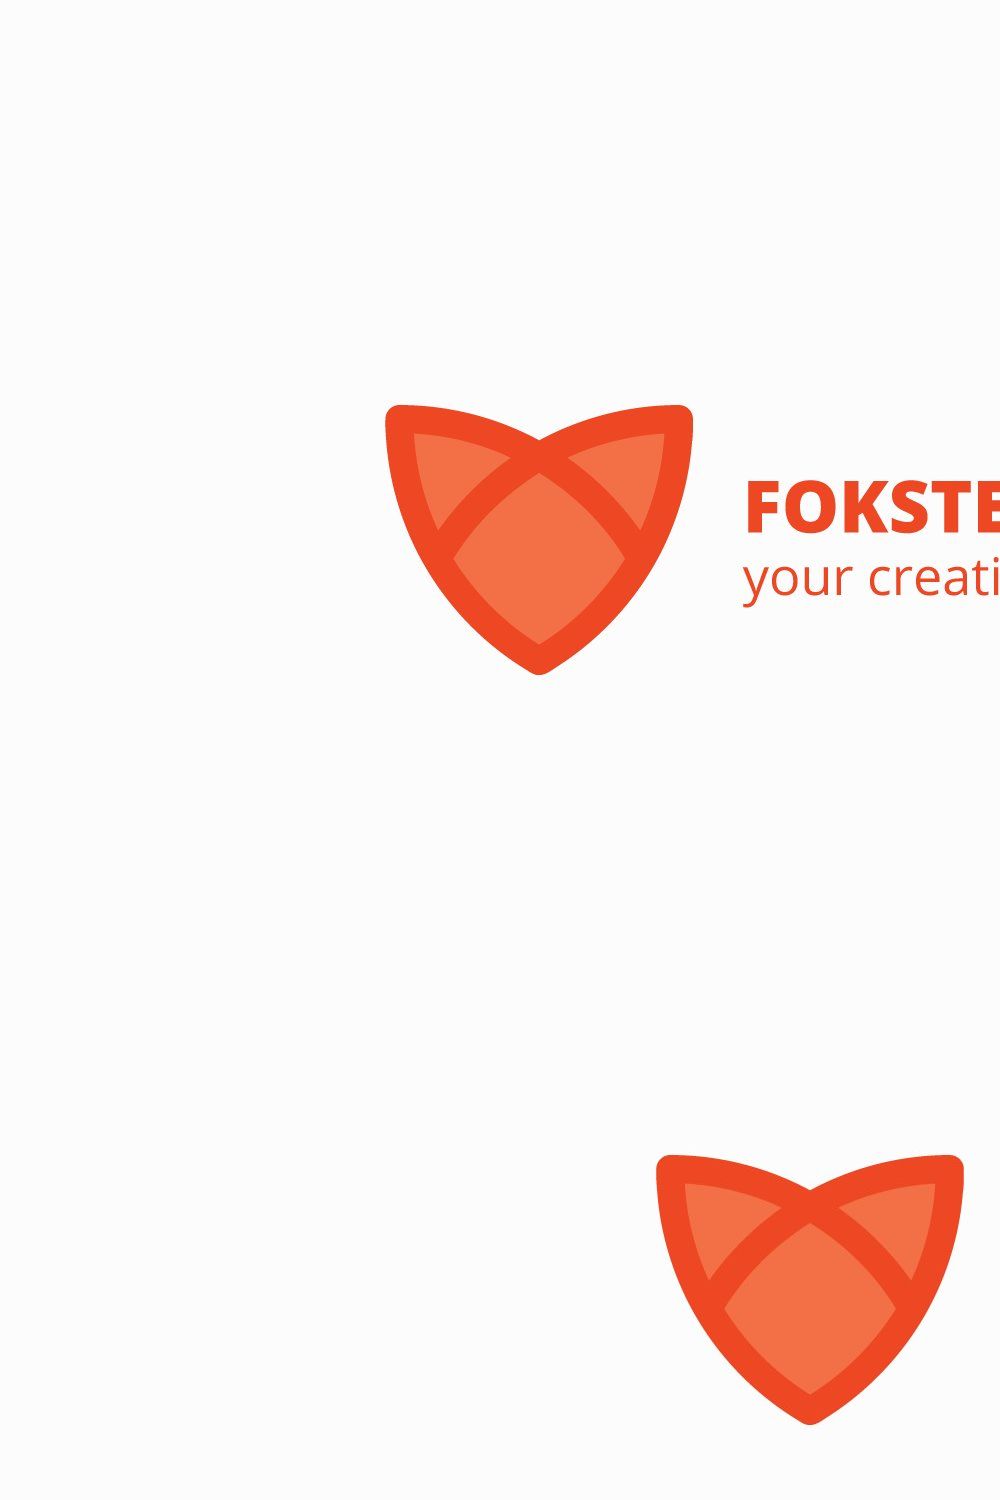 Fox Logo pinterest preview image.